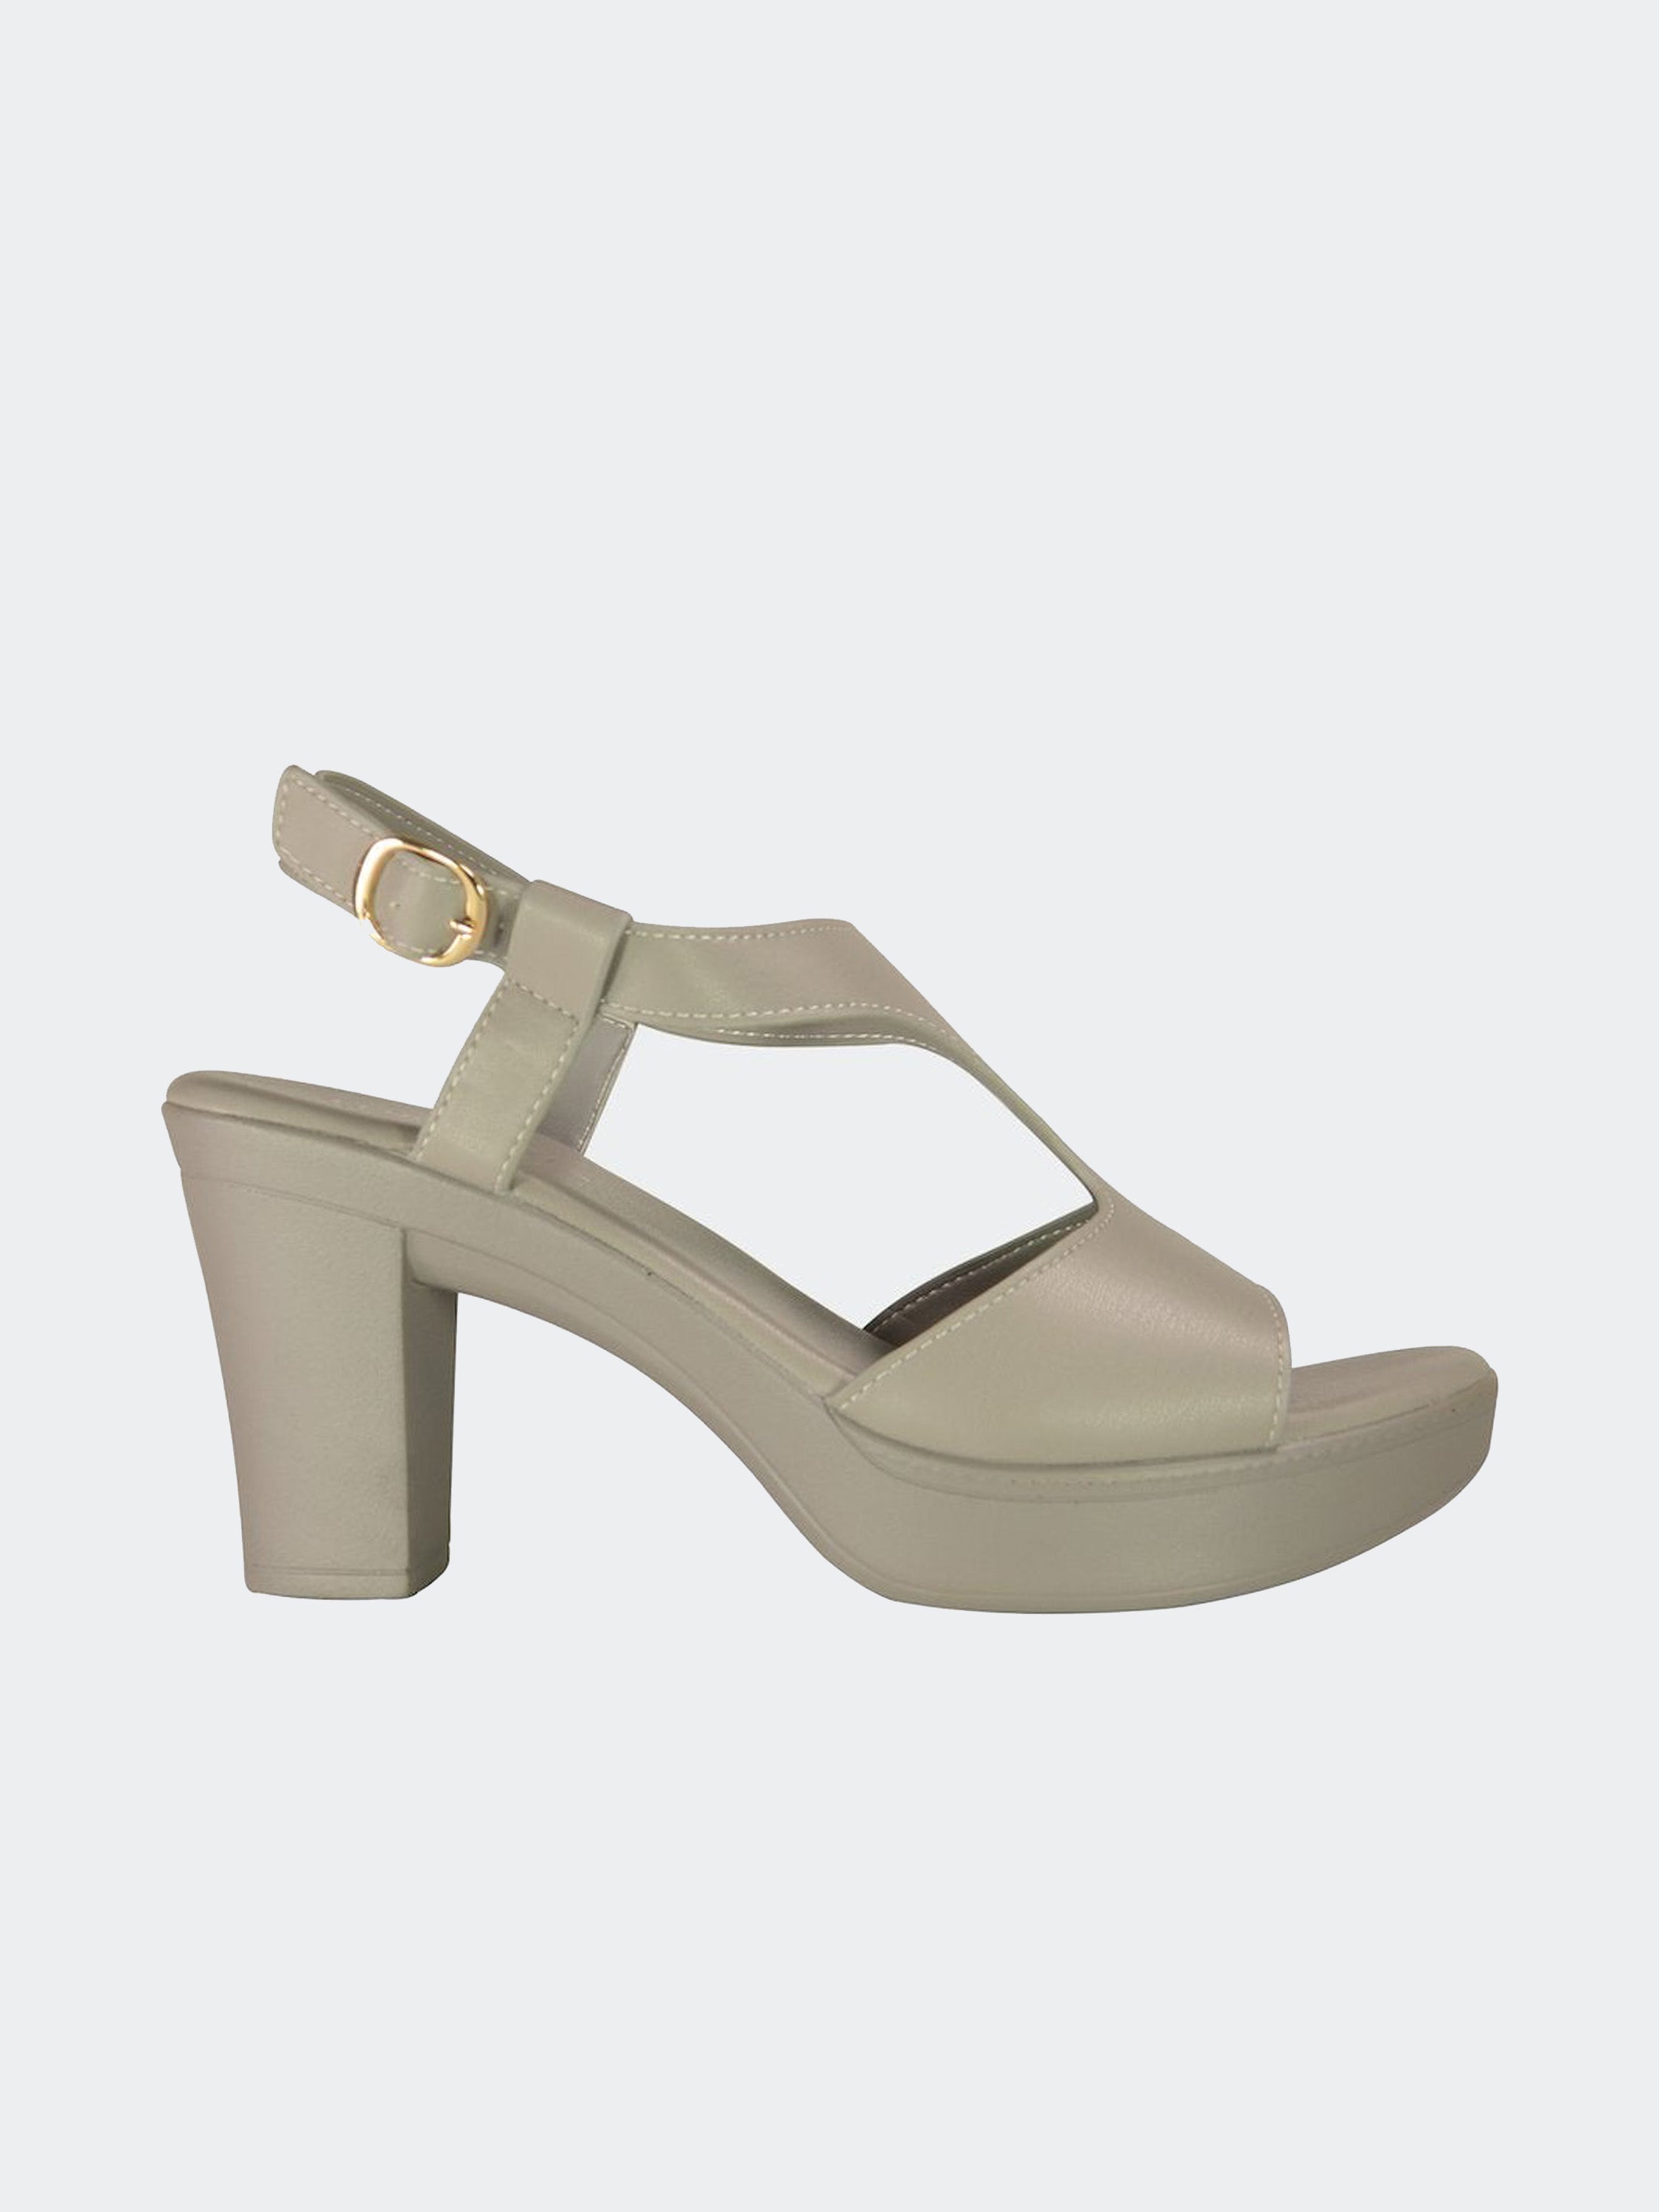 Michelle Morgan 914RJY72 Women's Heeled Sandals #color_Grey